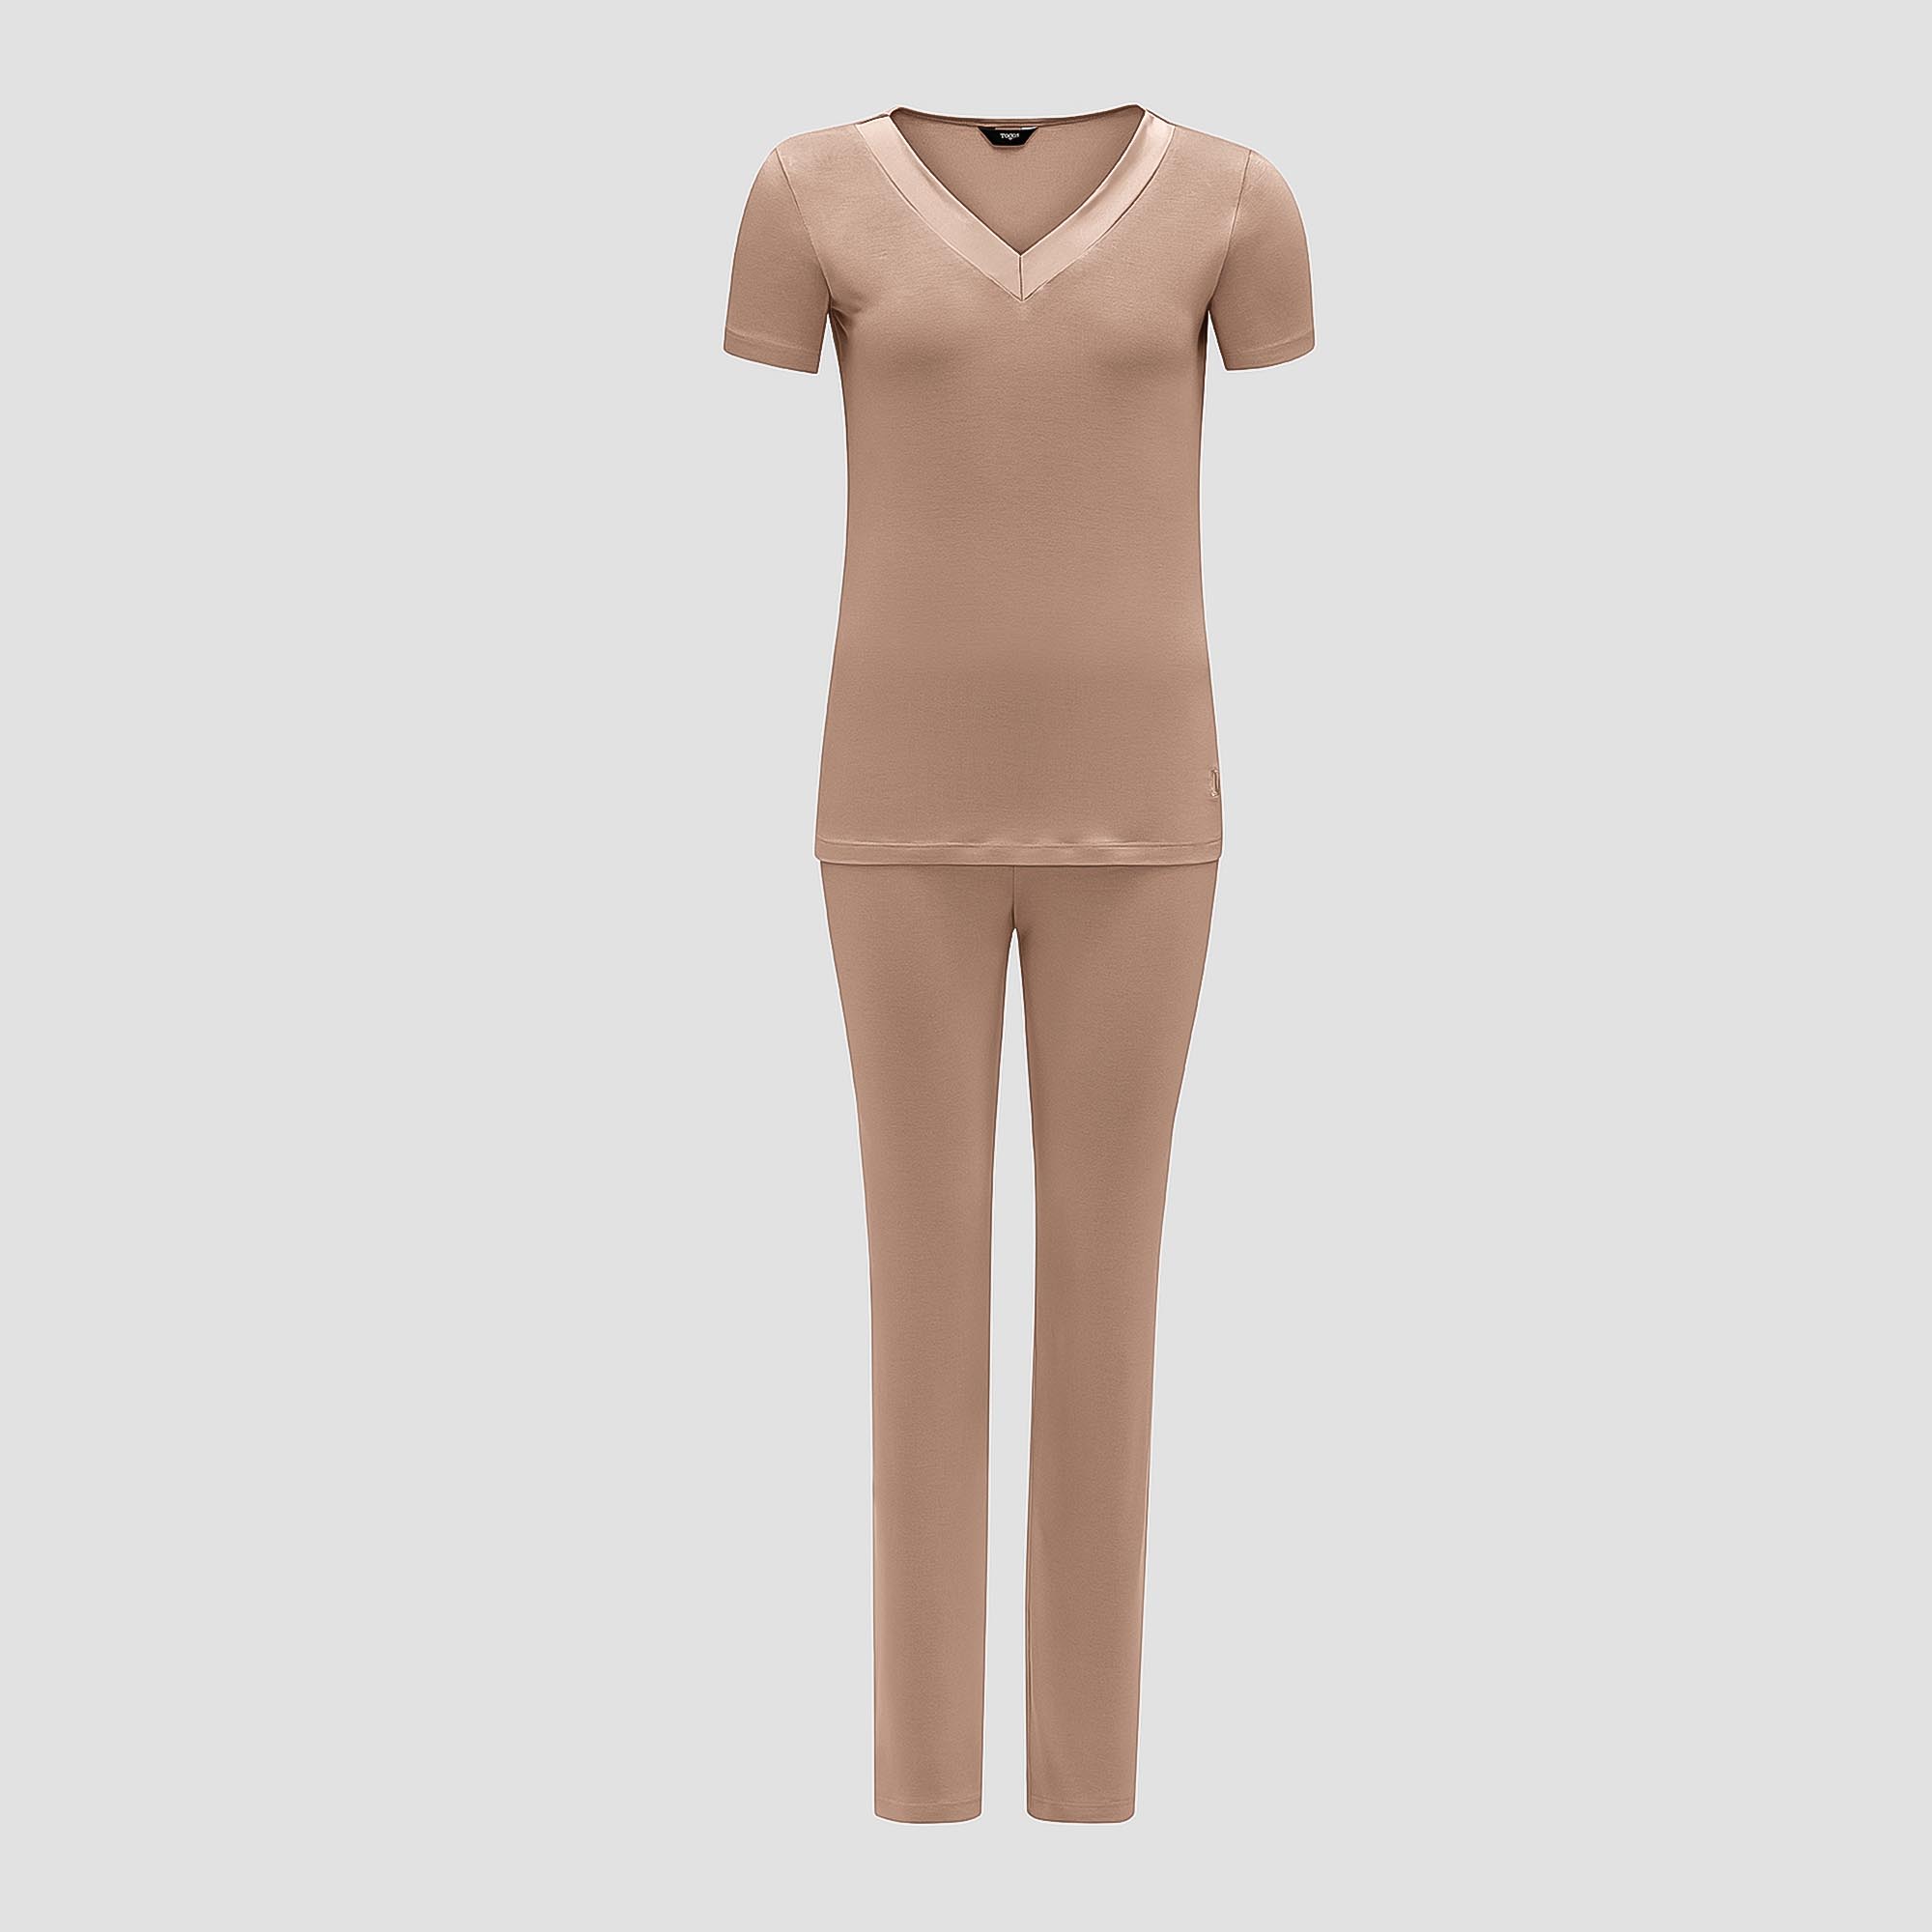 Пижама Togas Ингелла розово-бежевая женская M(46) 2 предмета пижама брюки